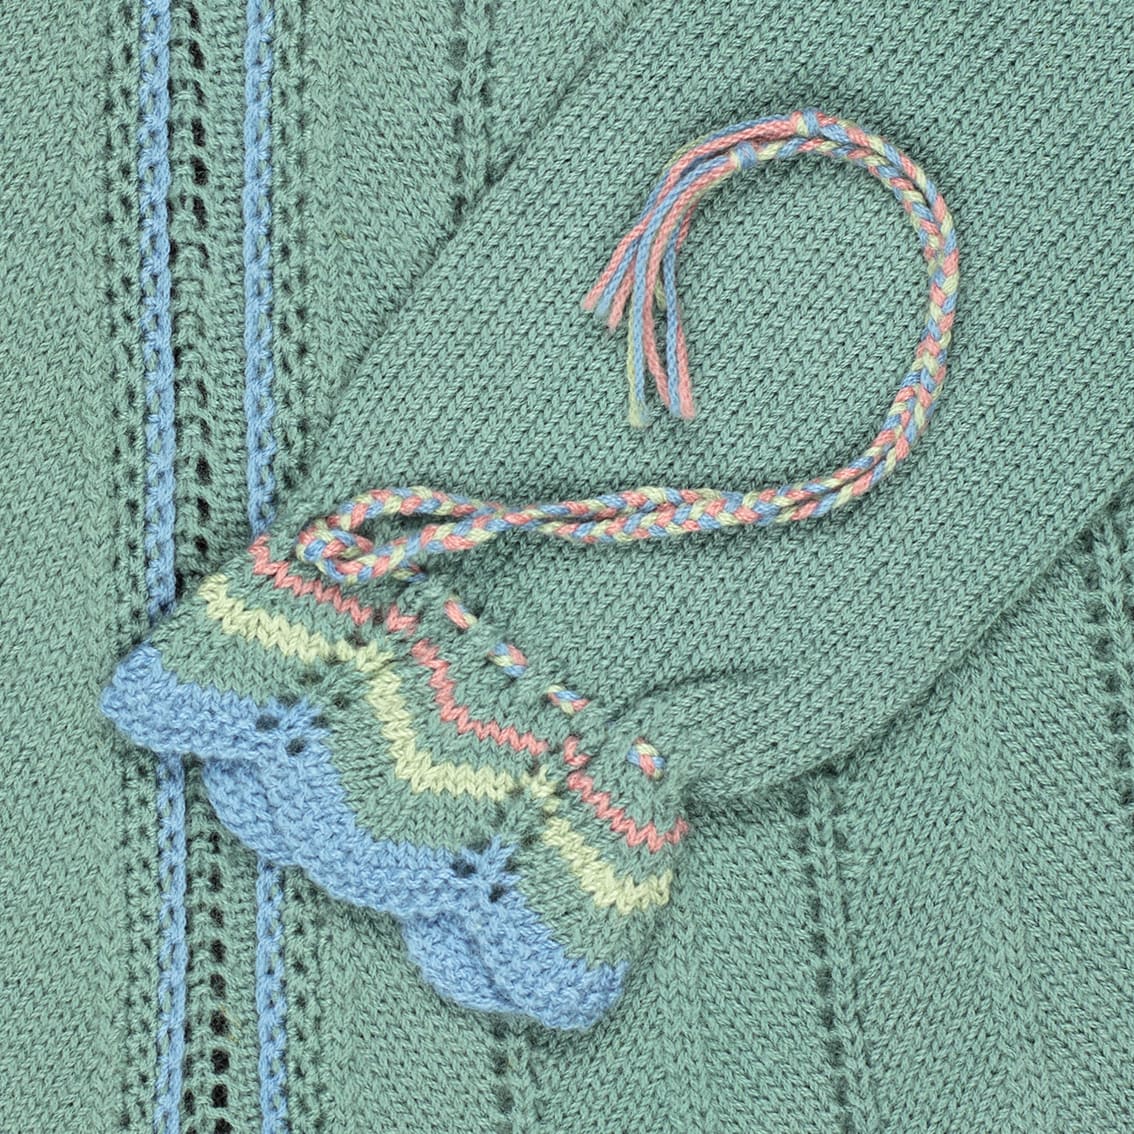 Jacket knitwear design by Alice Starmore